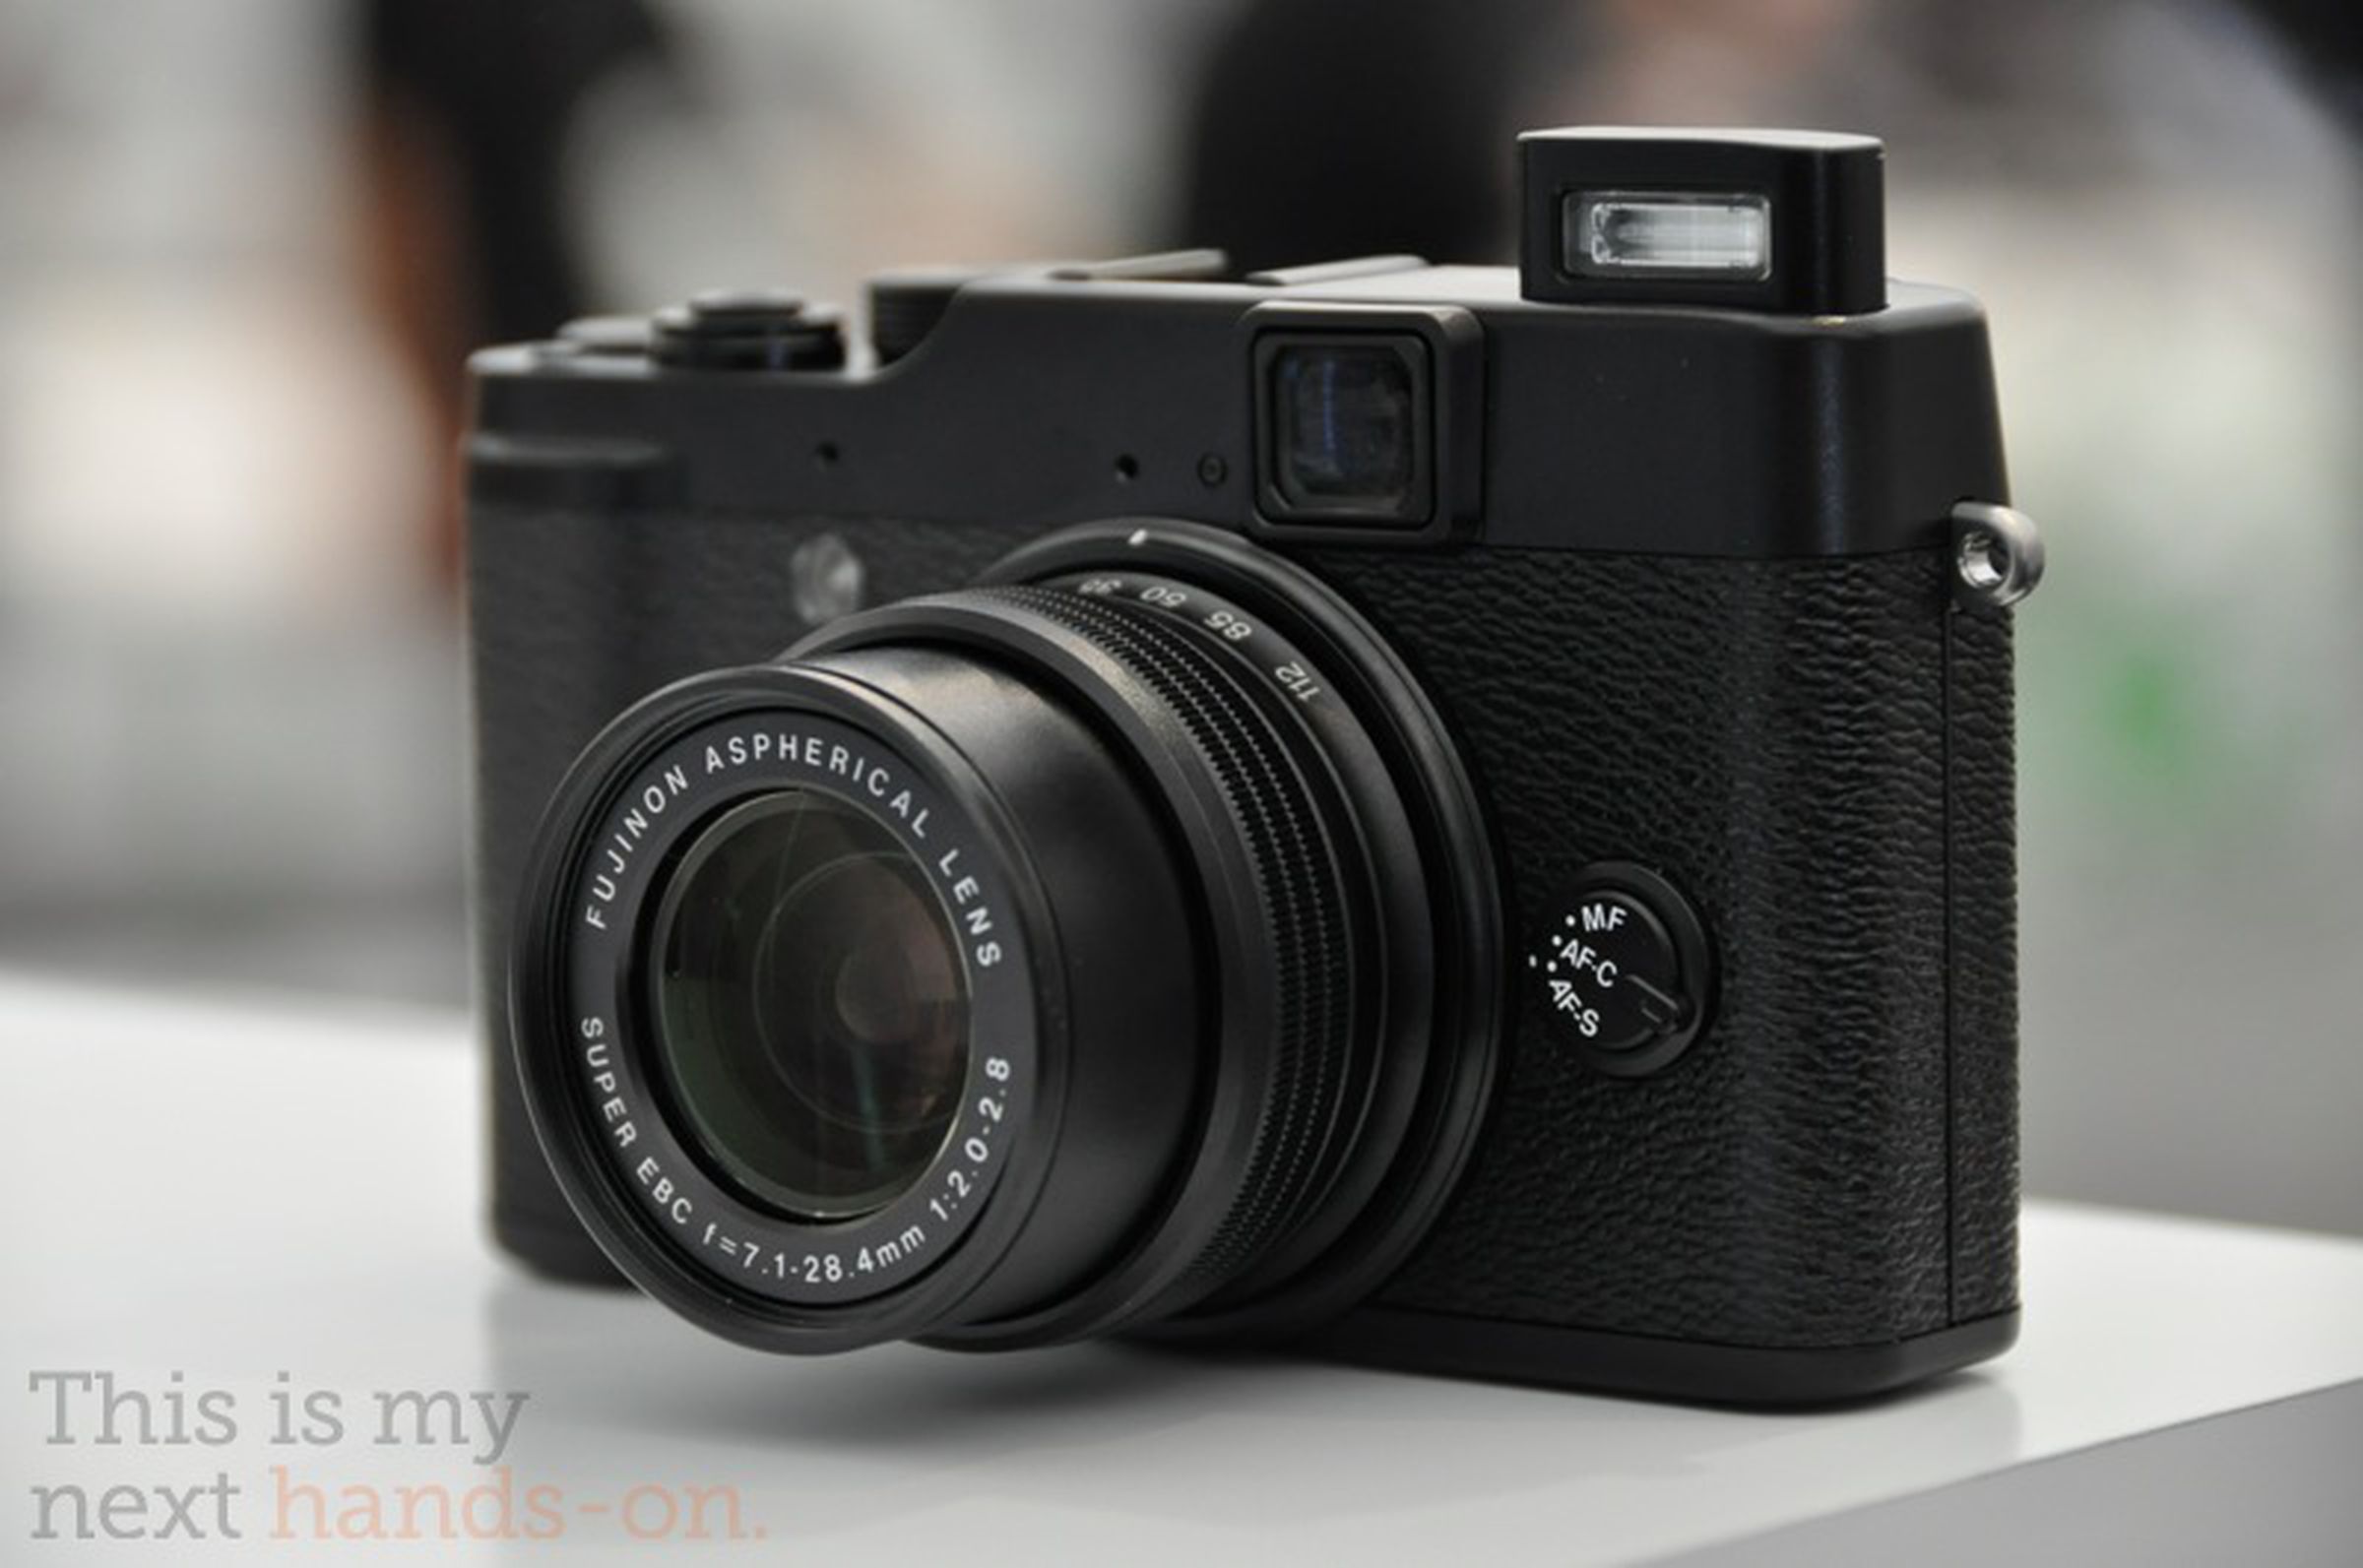 Fujifilm X10 hands-on photos